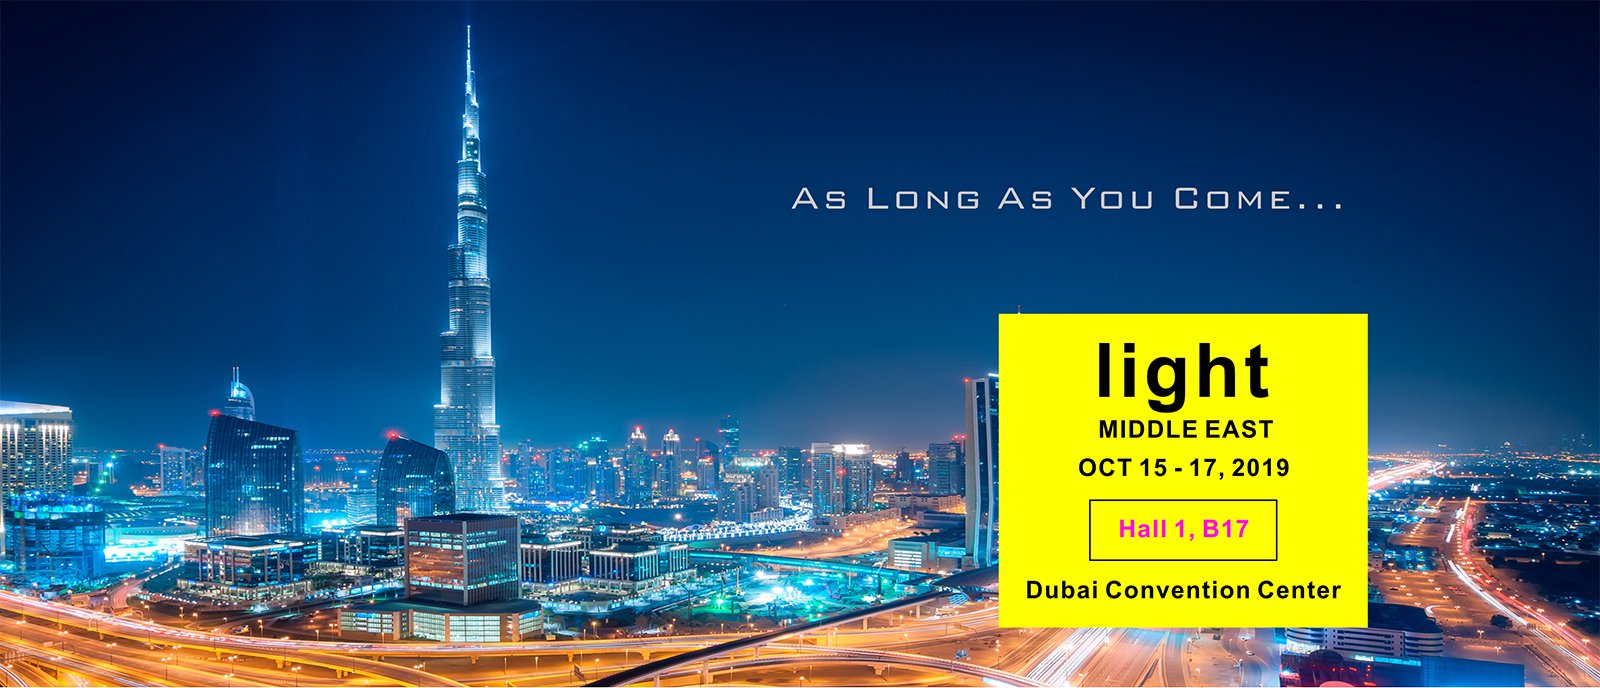 Light Middle East - Dubai Convention Center